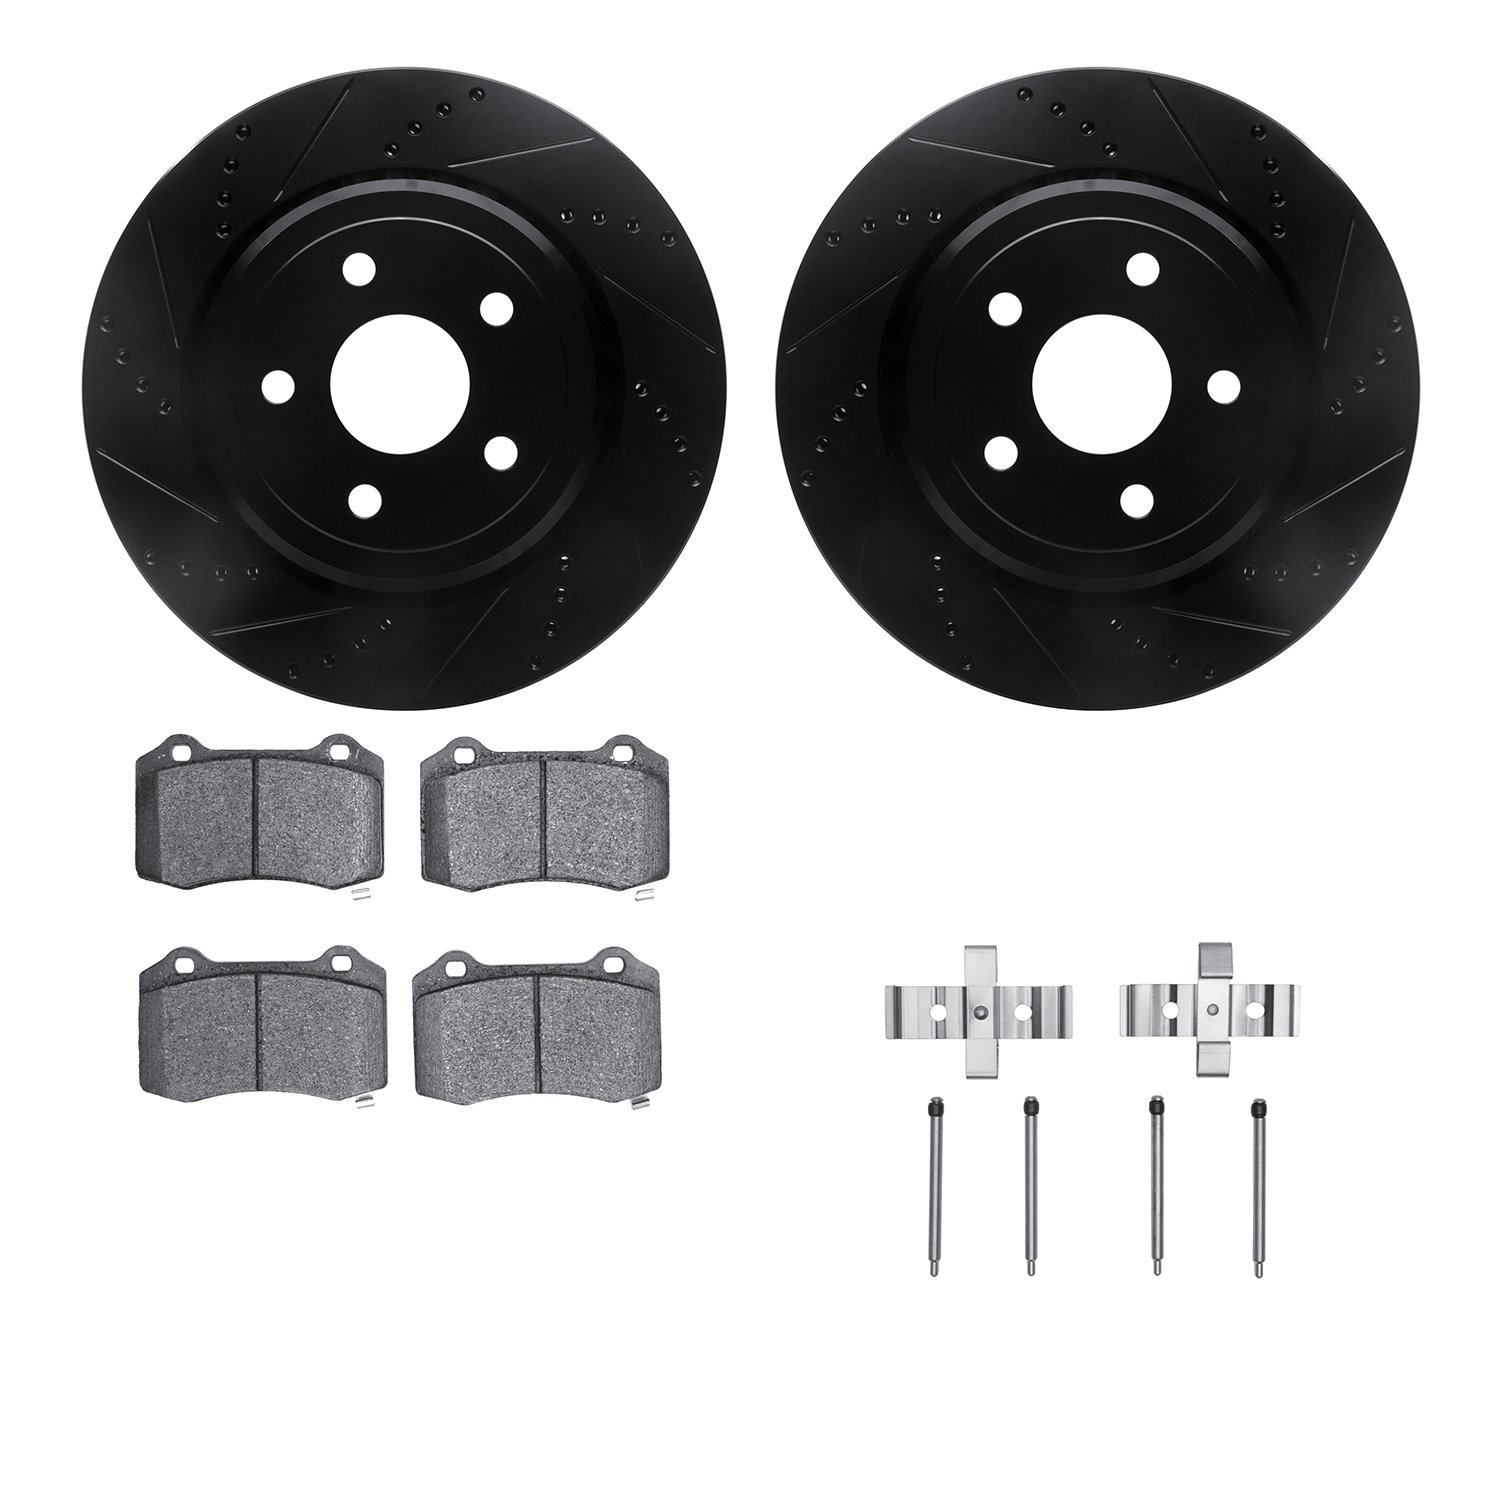 8412-42010 Drilled/Slotted Brake Rotors with Ultimate-Duty Brake Pads Kit & Hardware [Black], Fits Select Mopar, Position: Rear